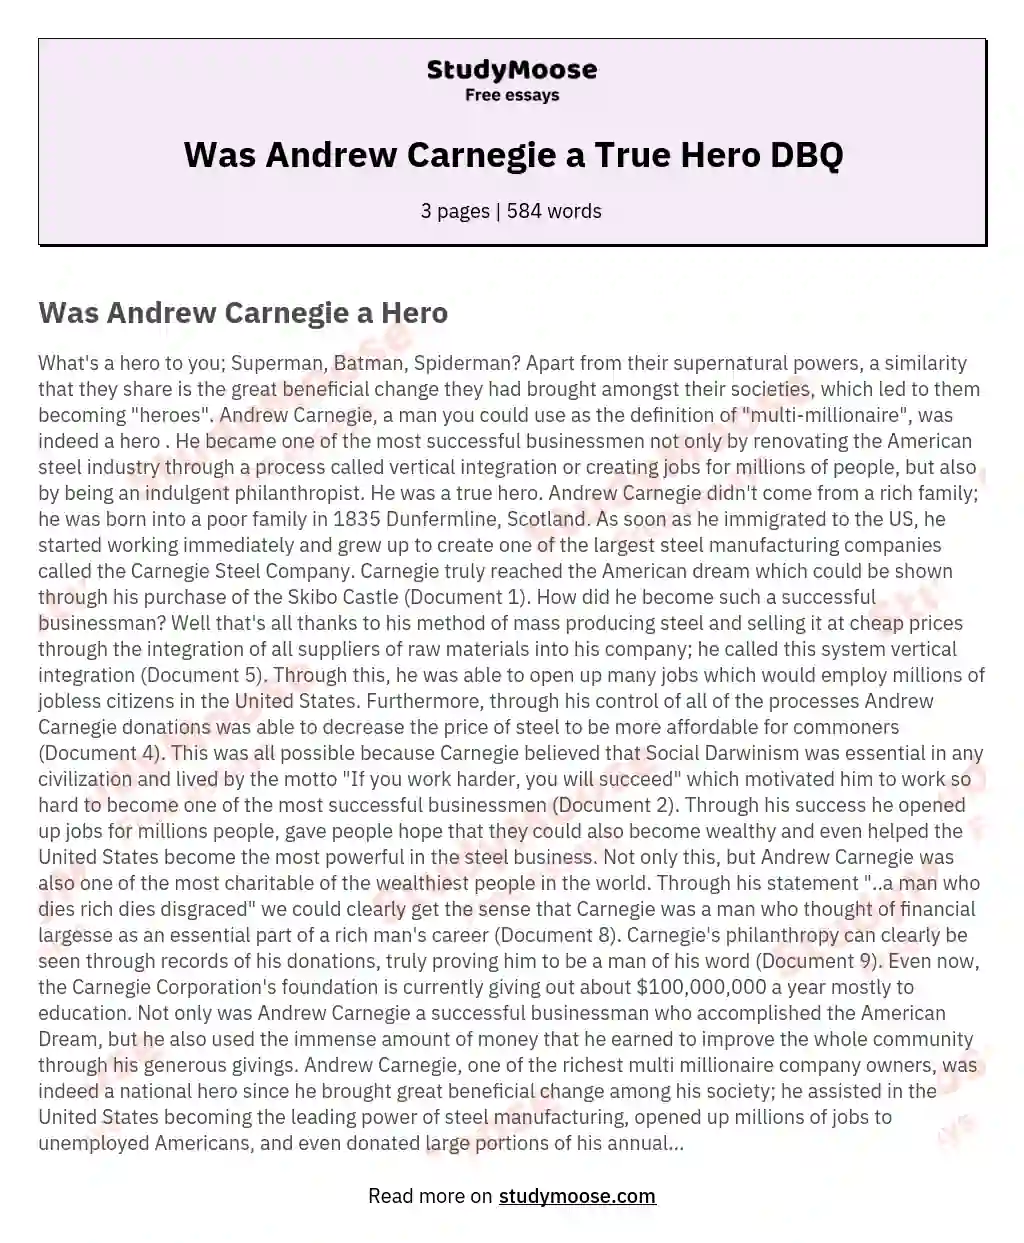 Was Andrew Carnegie a True Hero DBQ essay